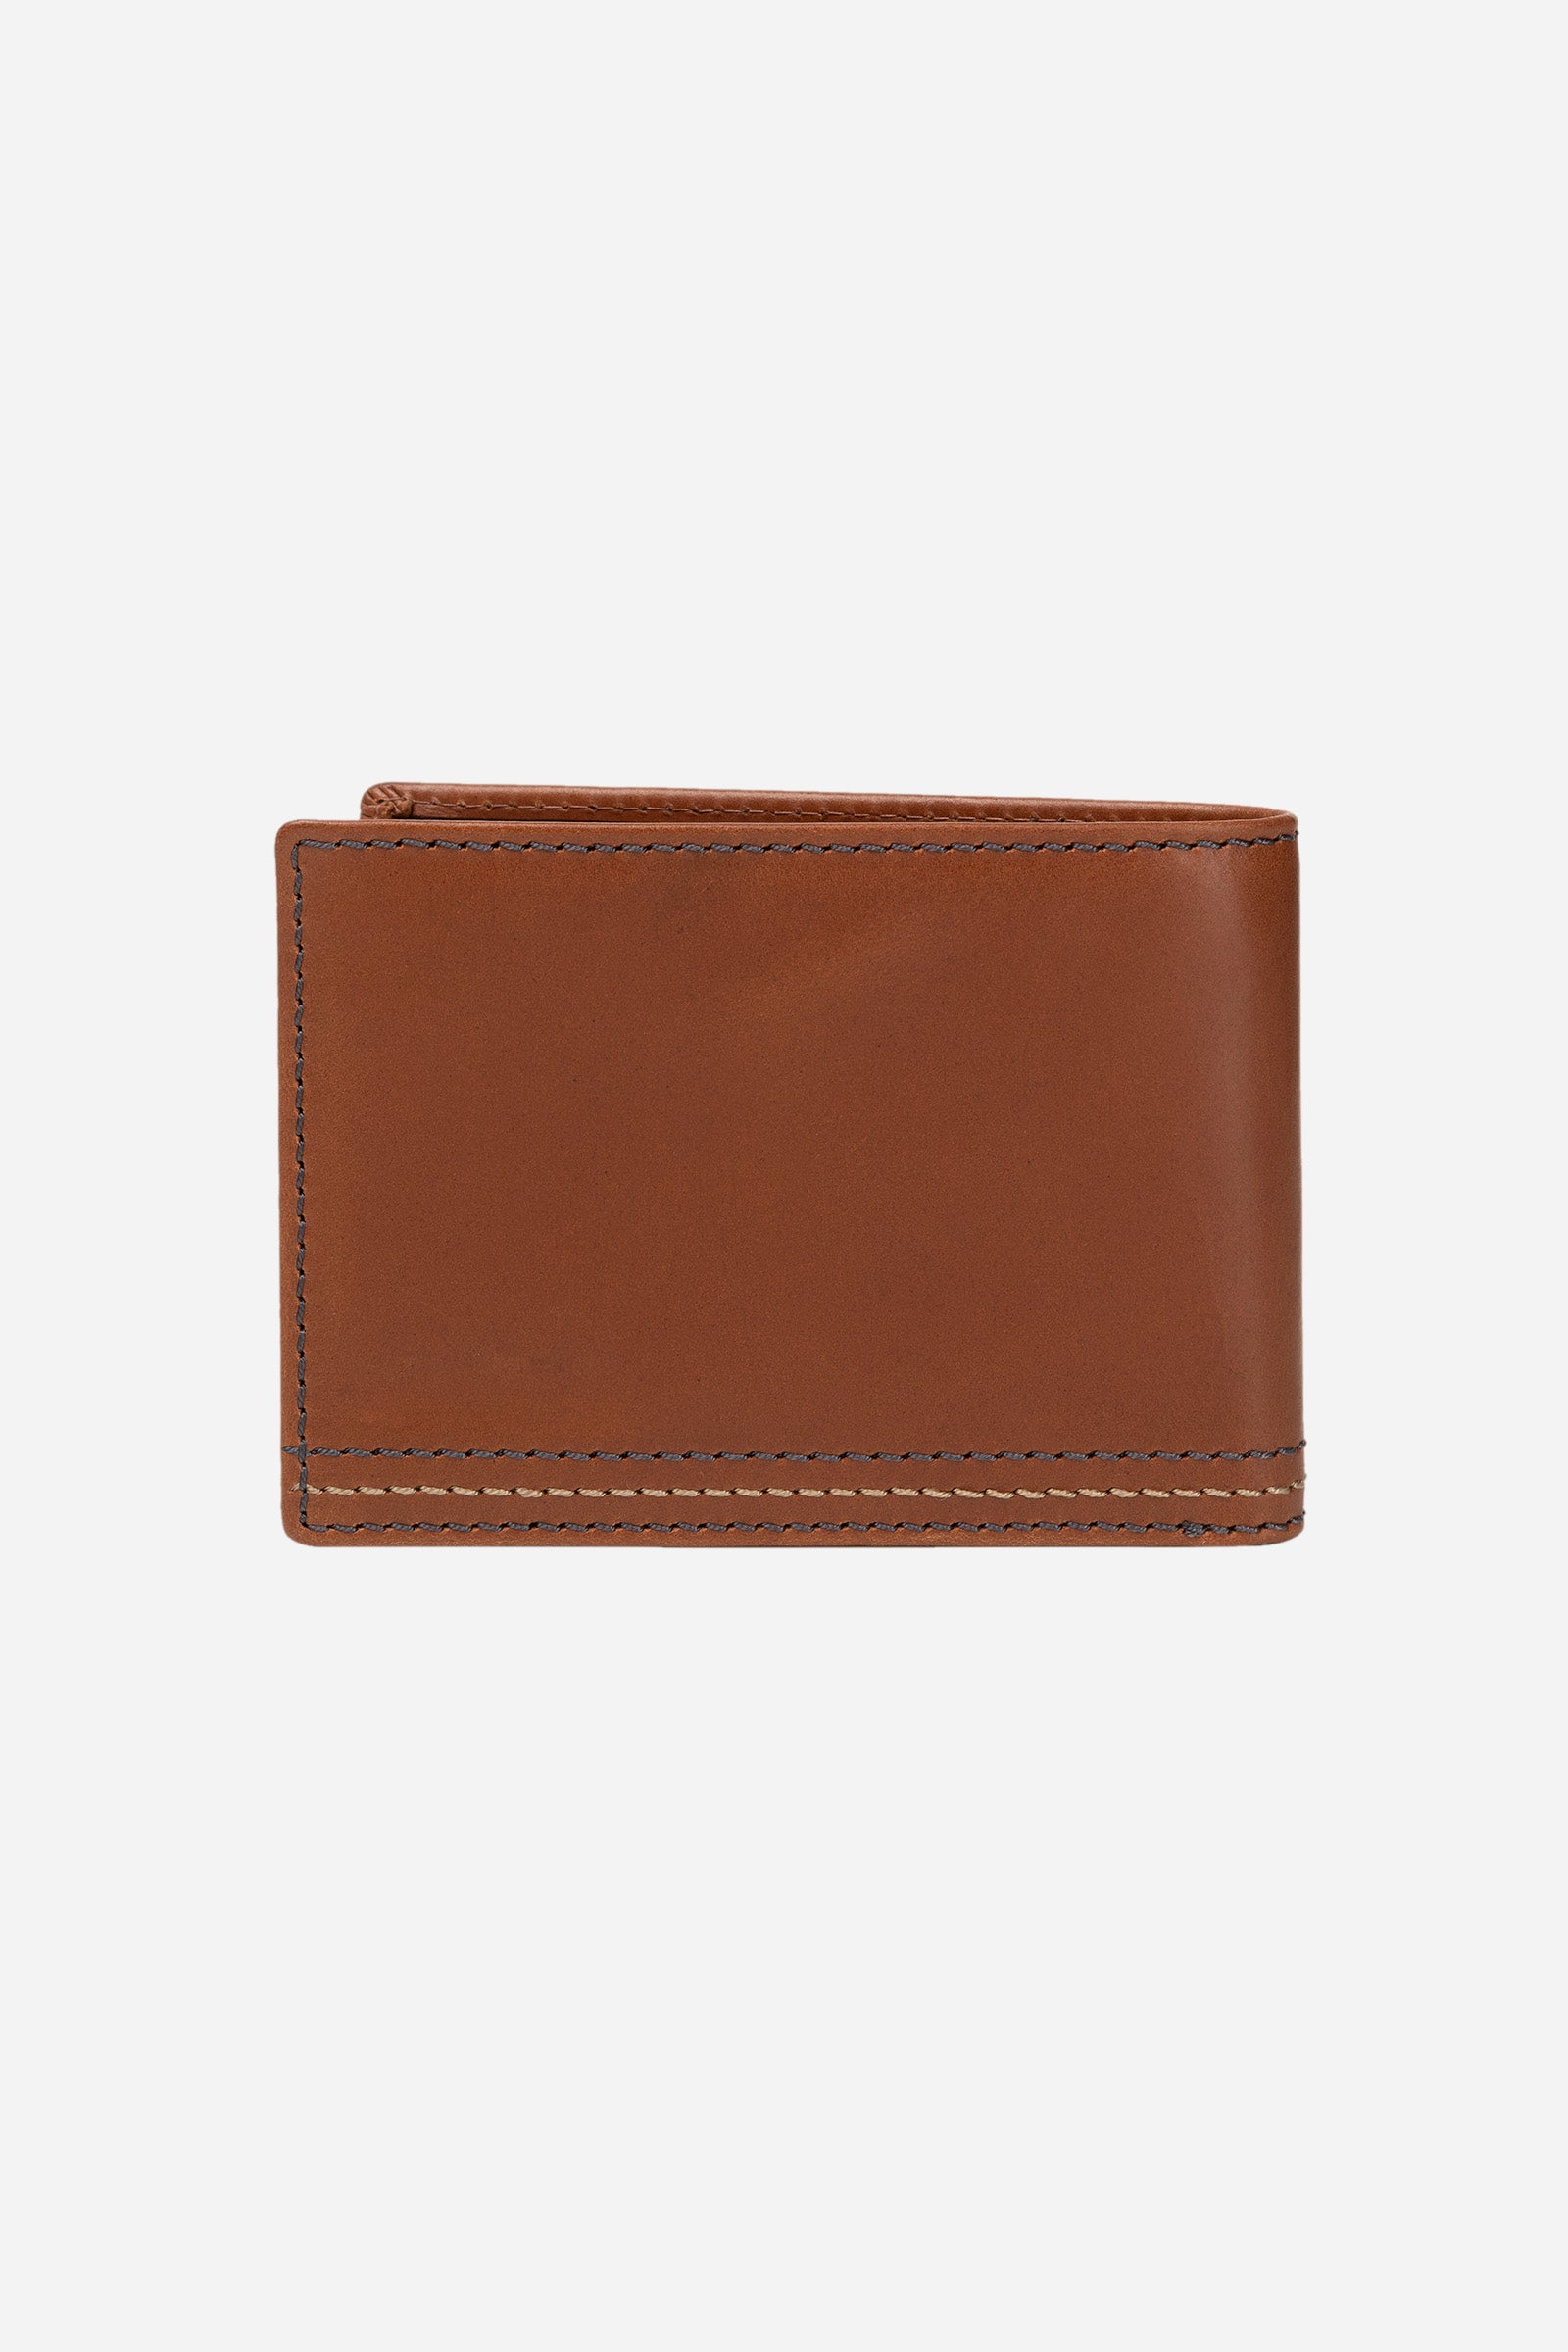 Men's leather wallet - Axel